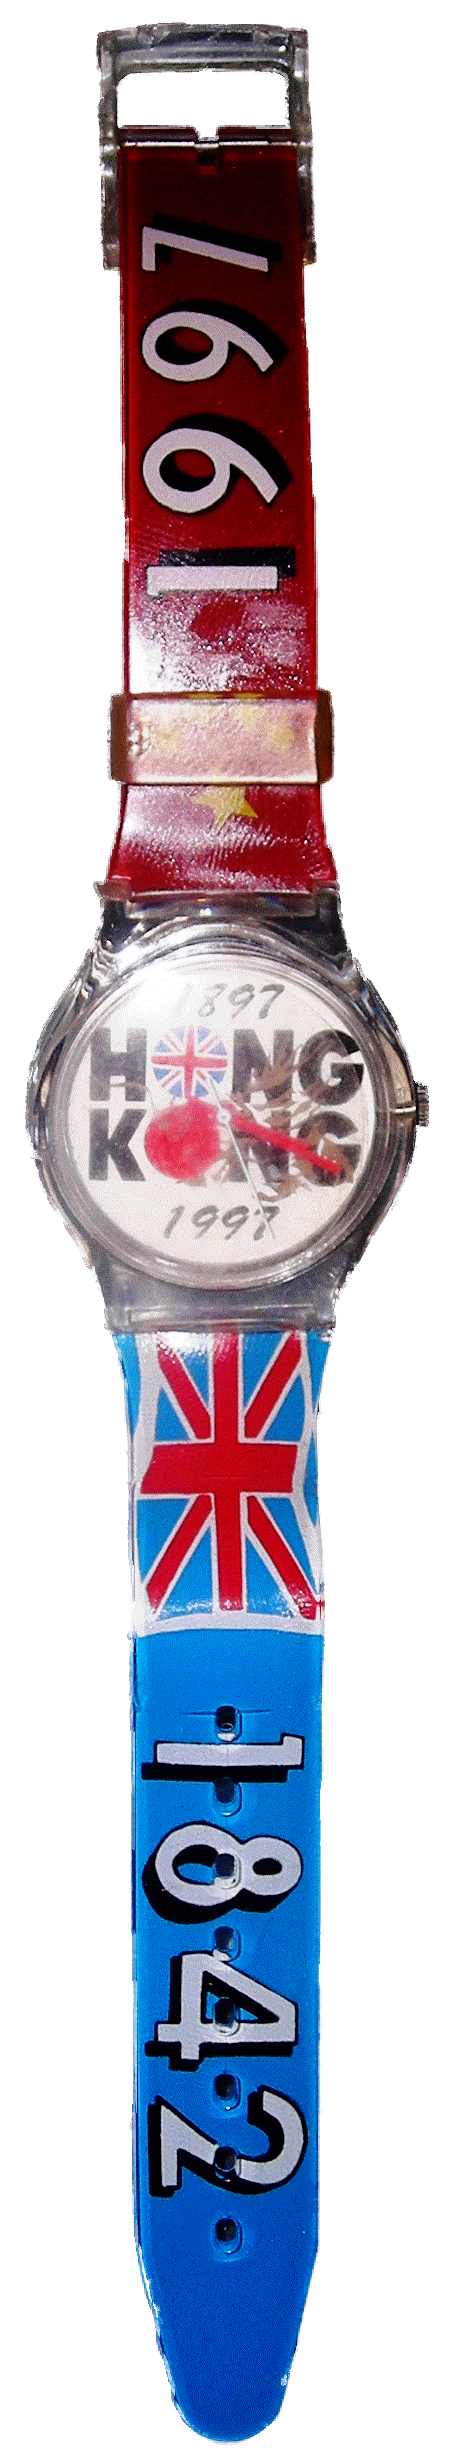 hong kong handover watch